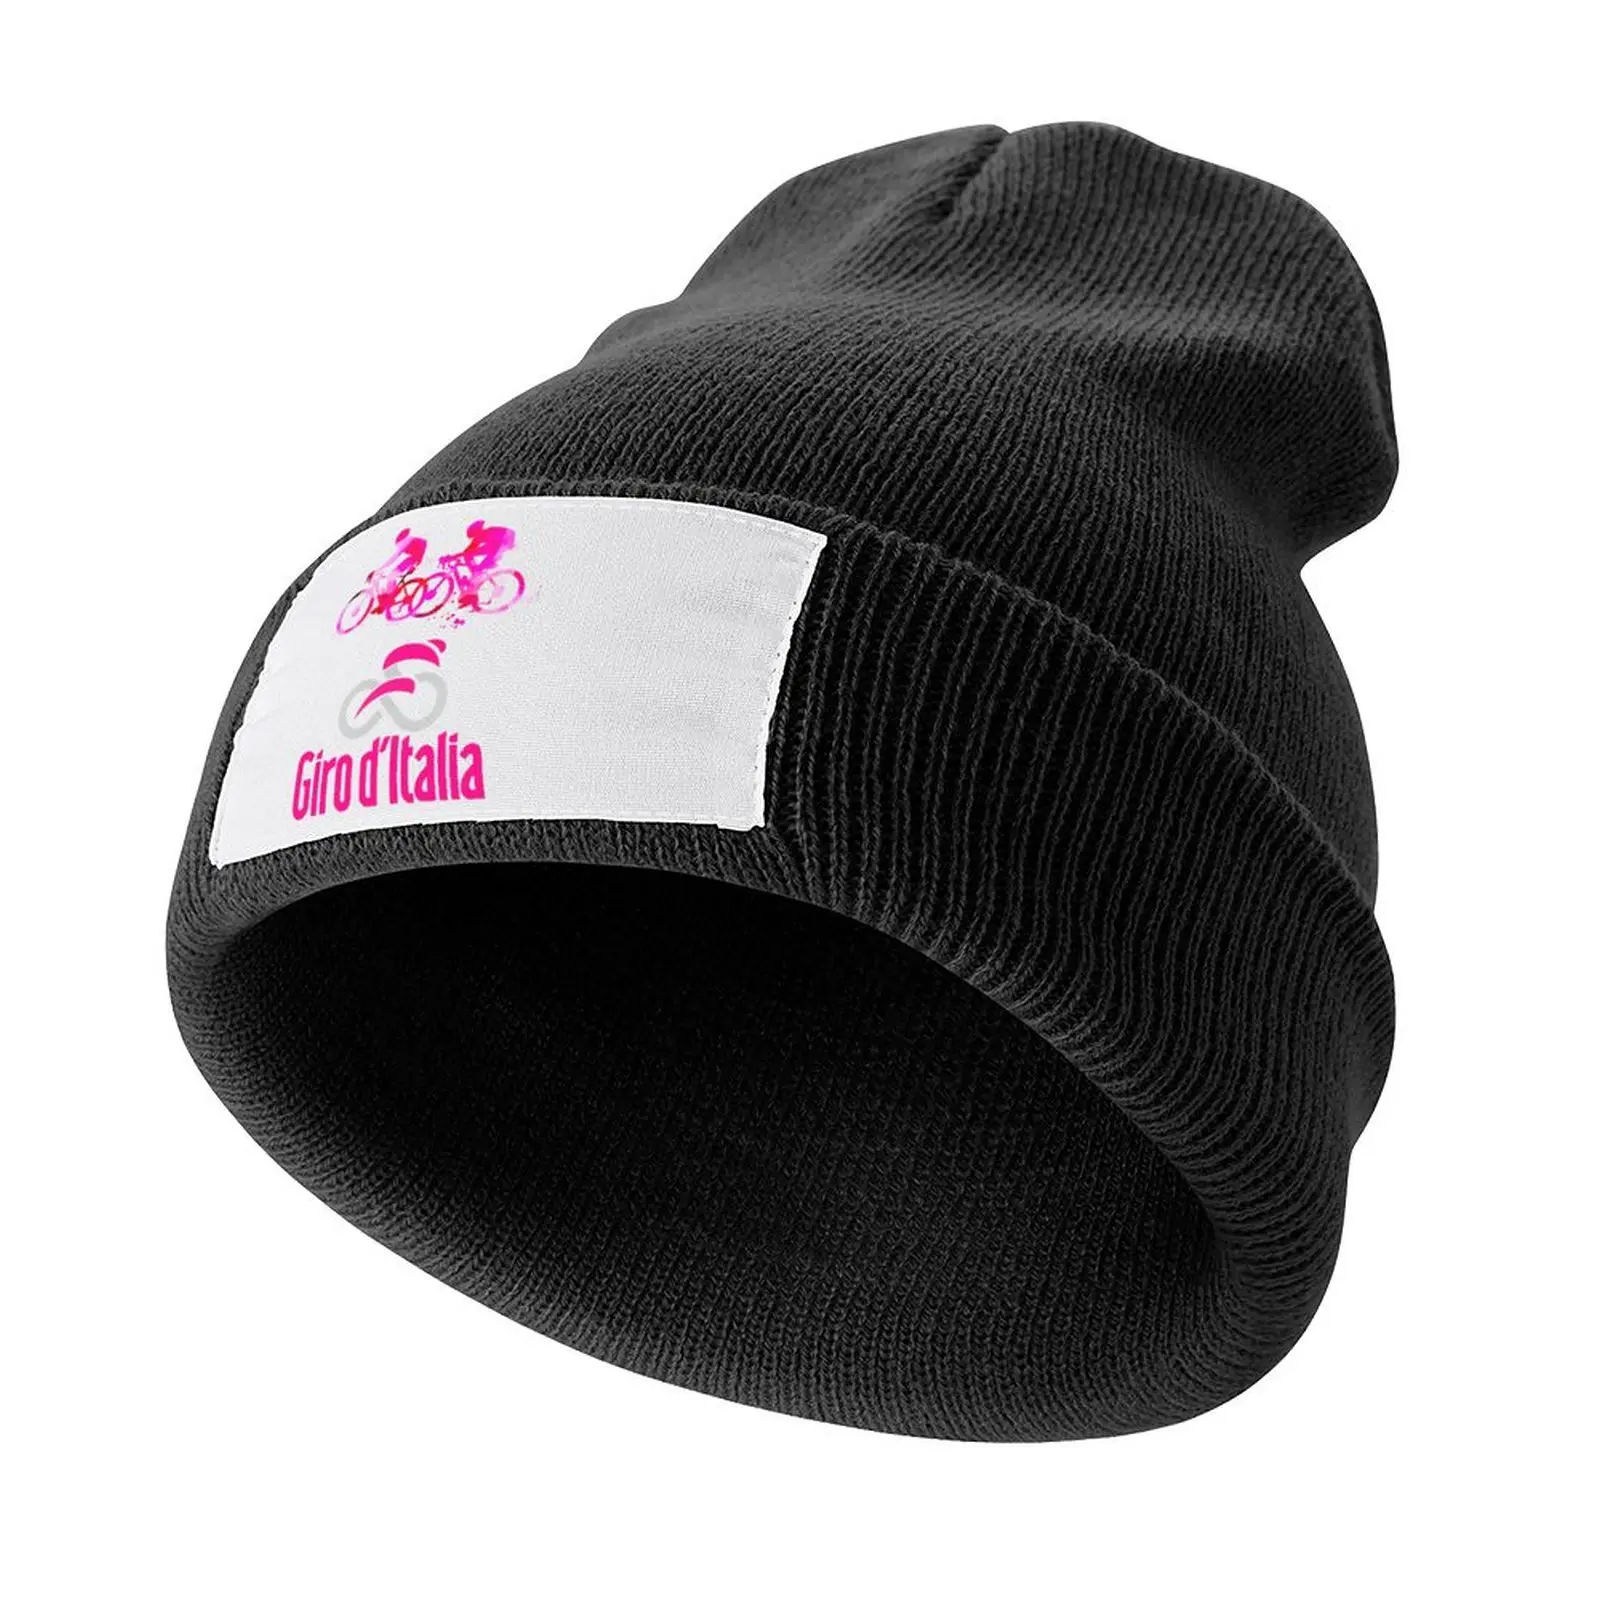 

Giro d'Italia Knitted Cap cute black Sports Caps Hats Man Women's